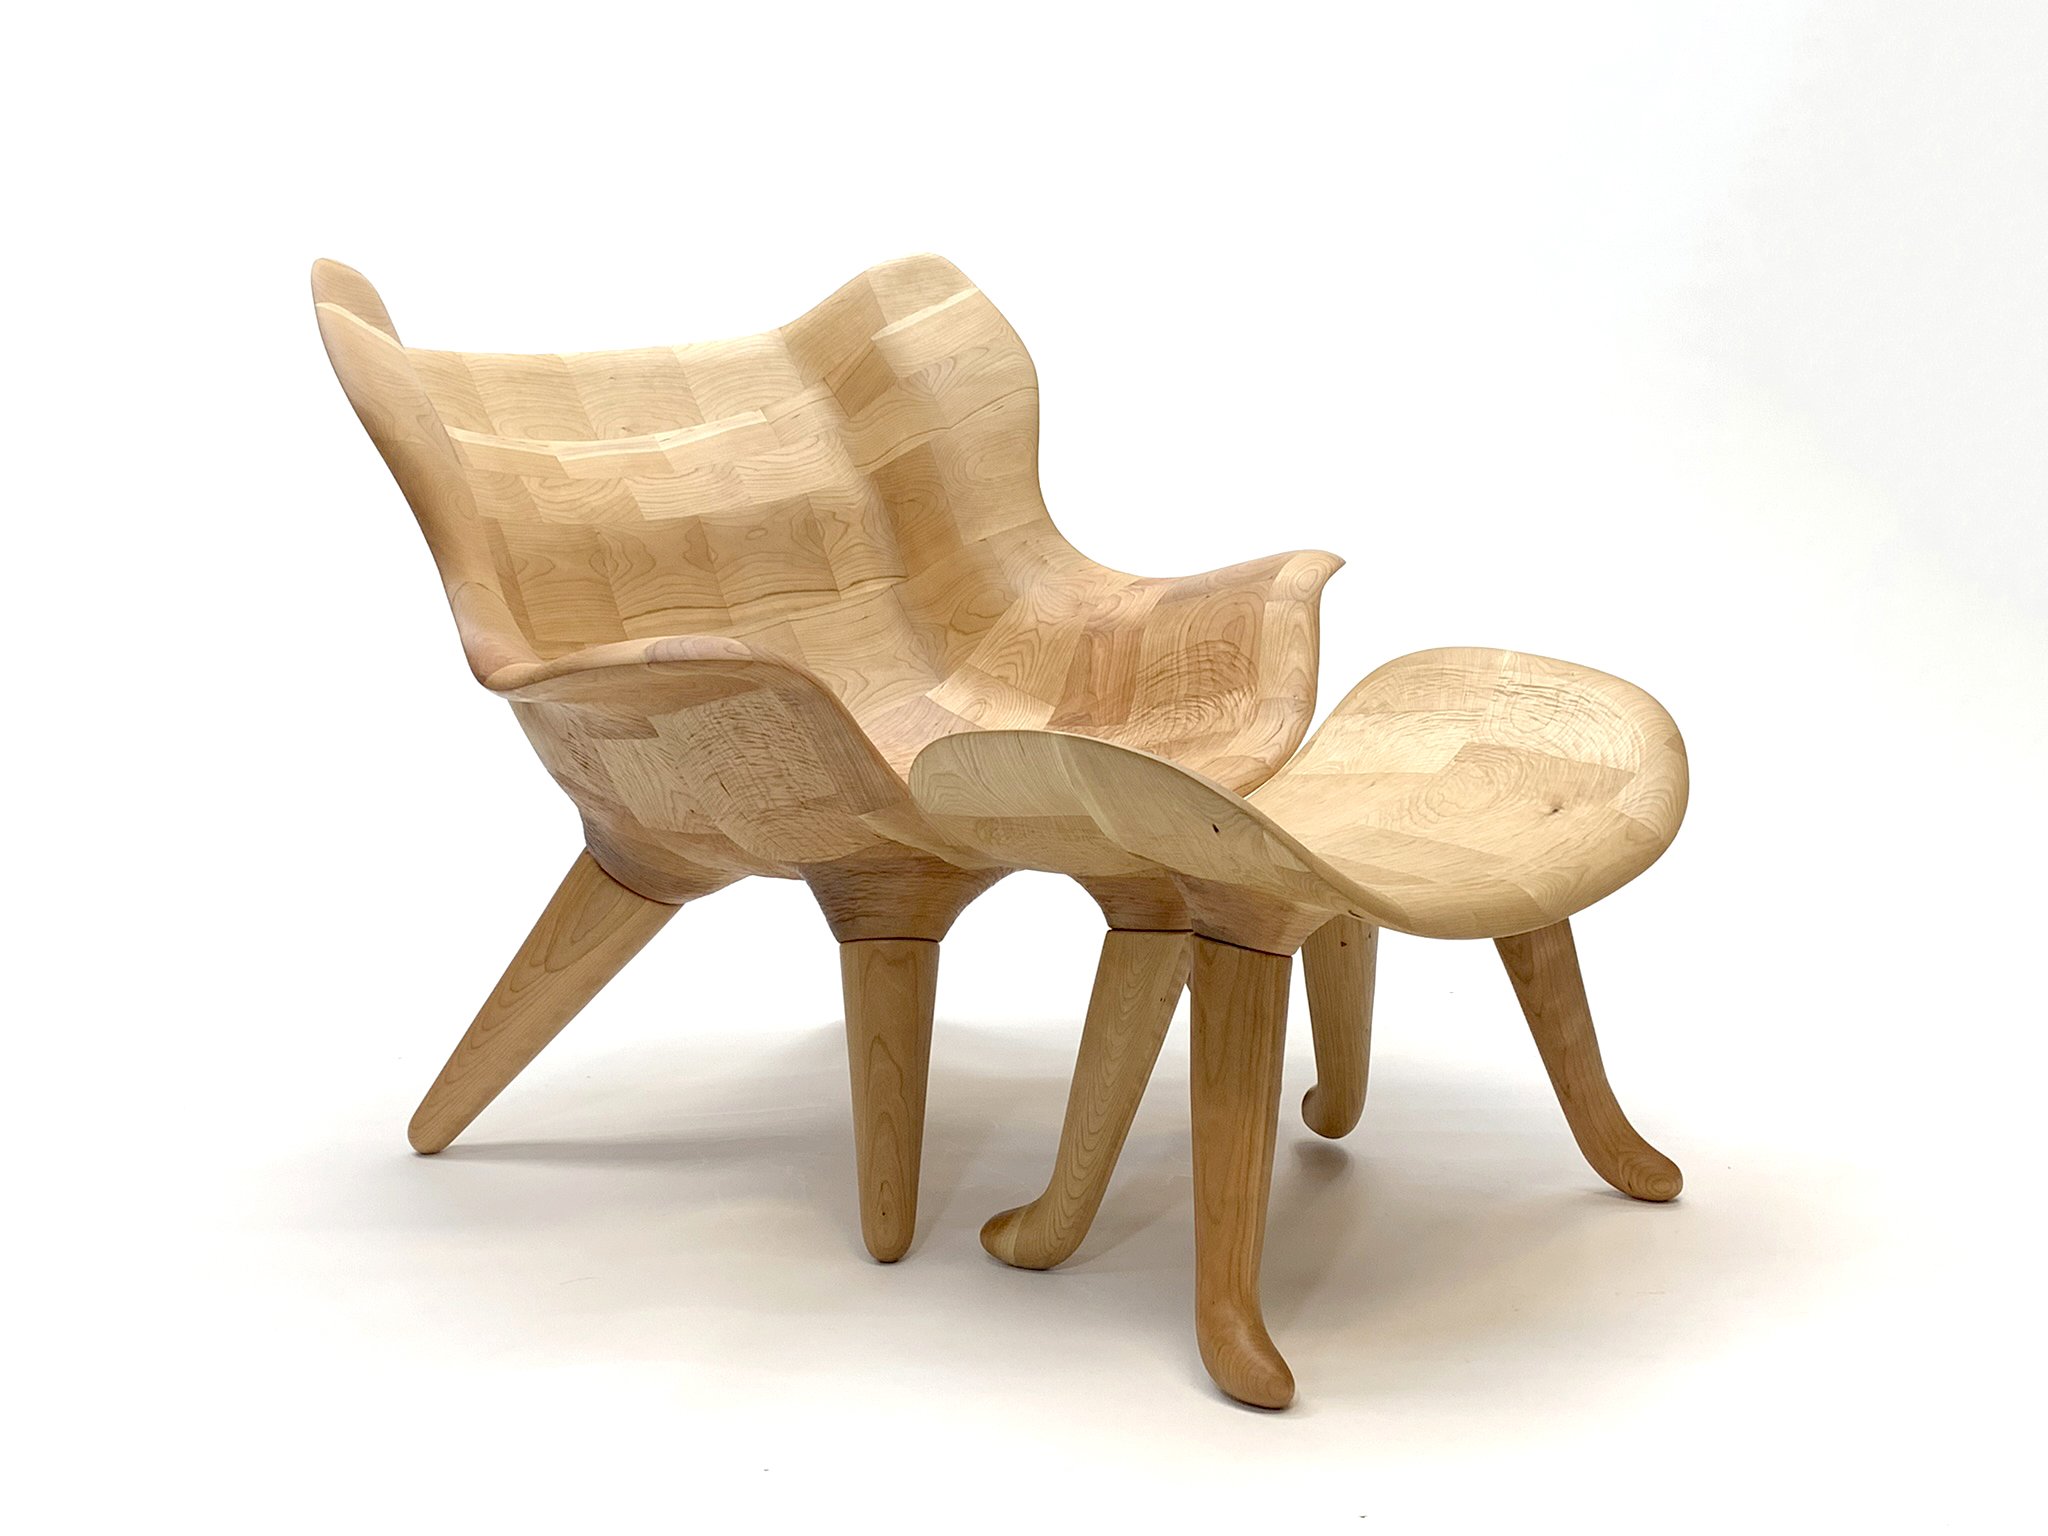 Mushroom Chair no. 2 with Ottoman